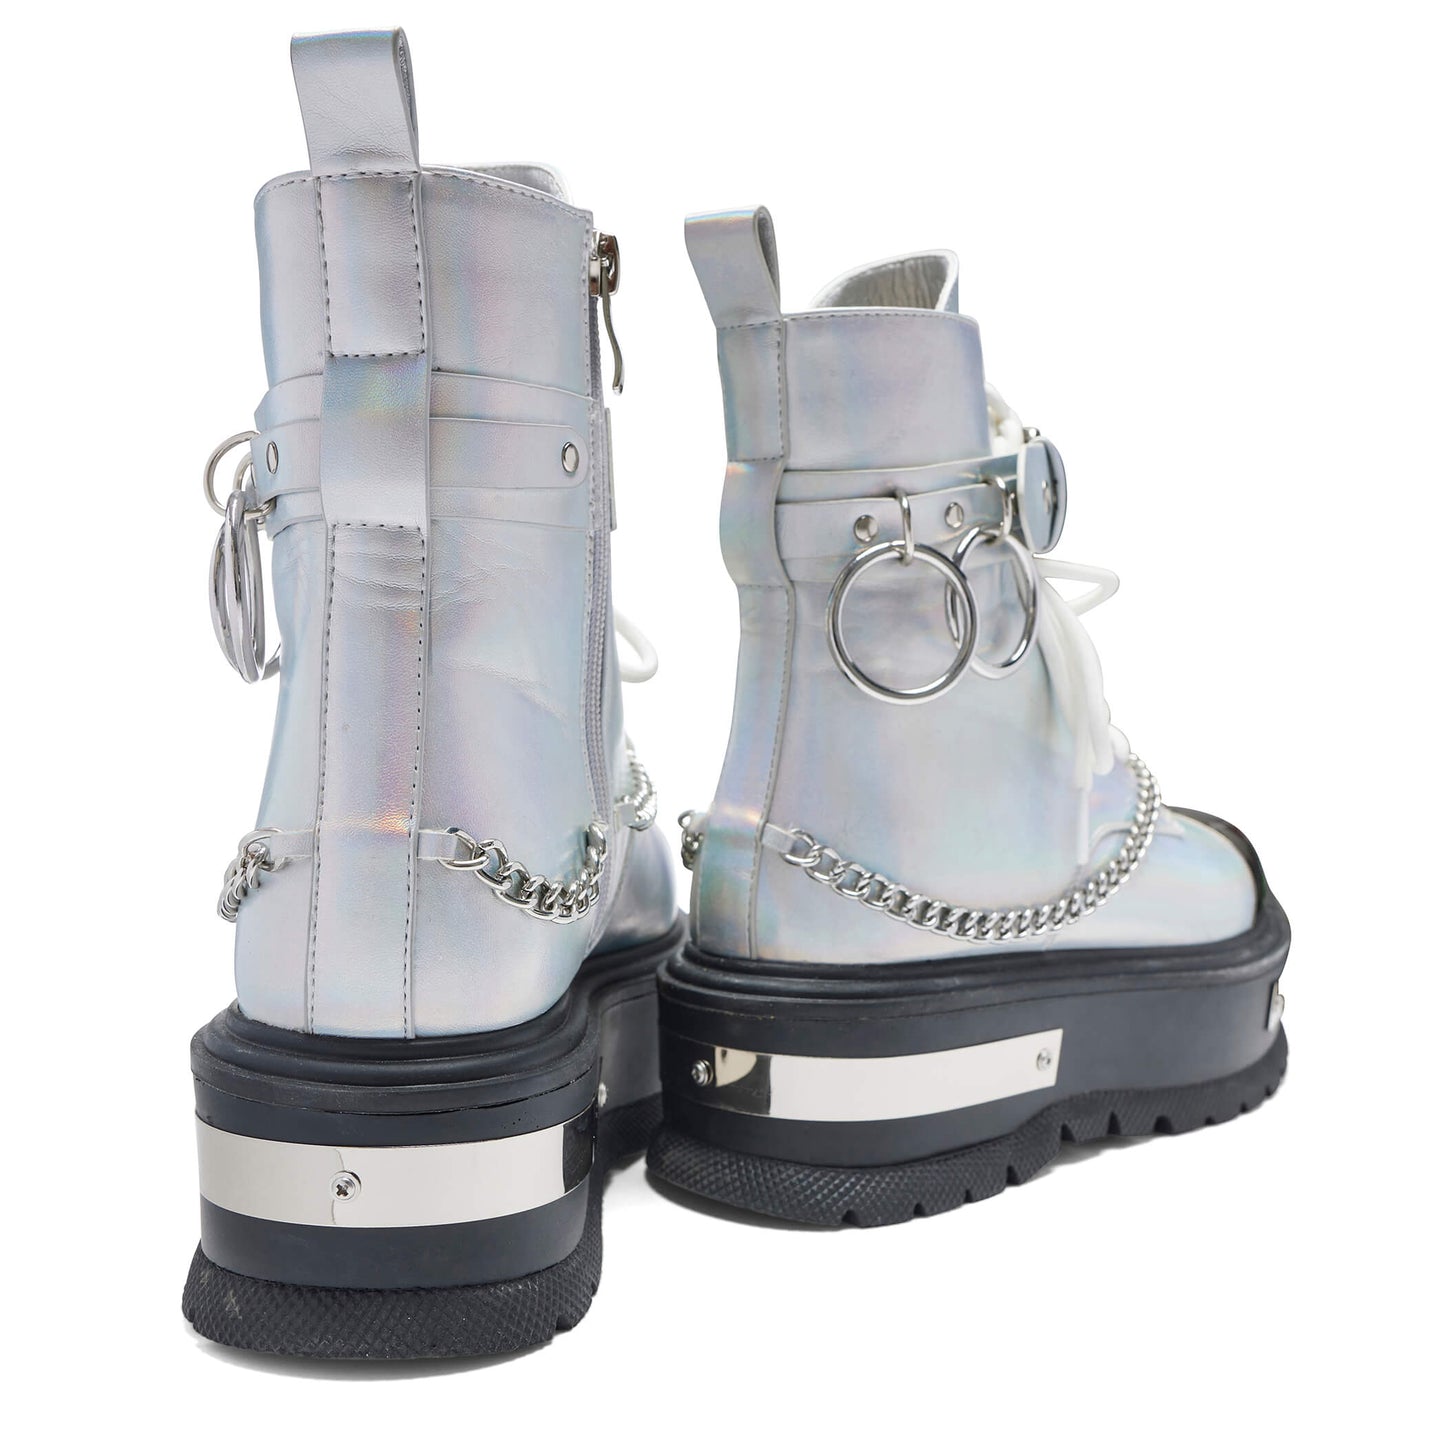 Borin Hardware Platform Boots - Silver Hologram - KOI Footwear - Back and Side View